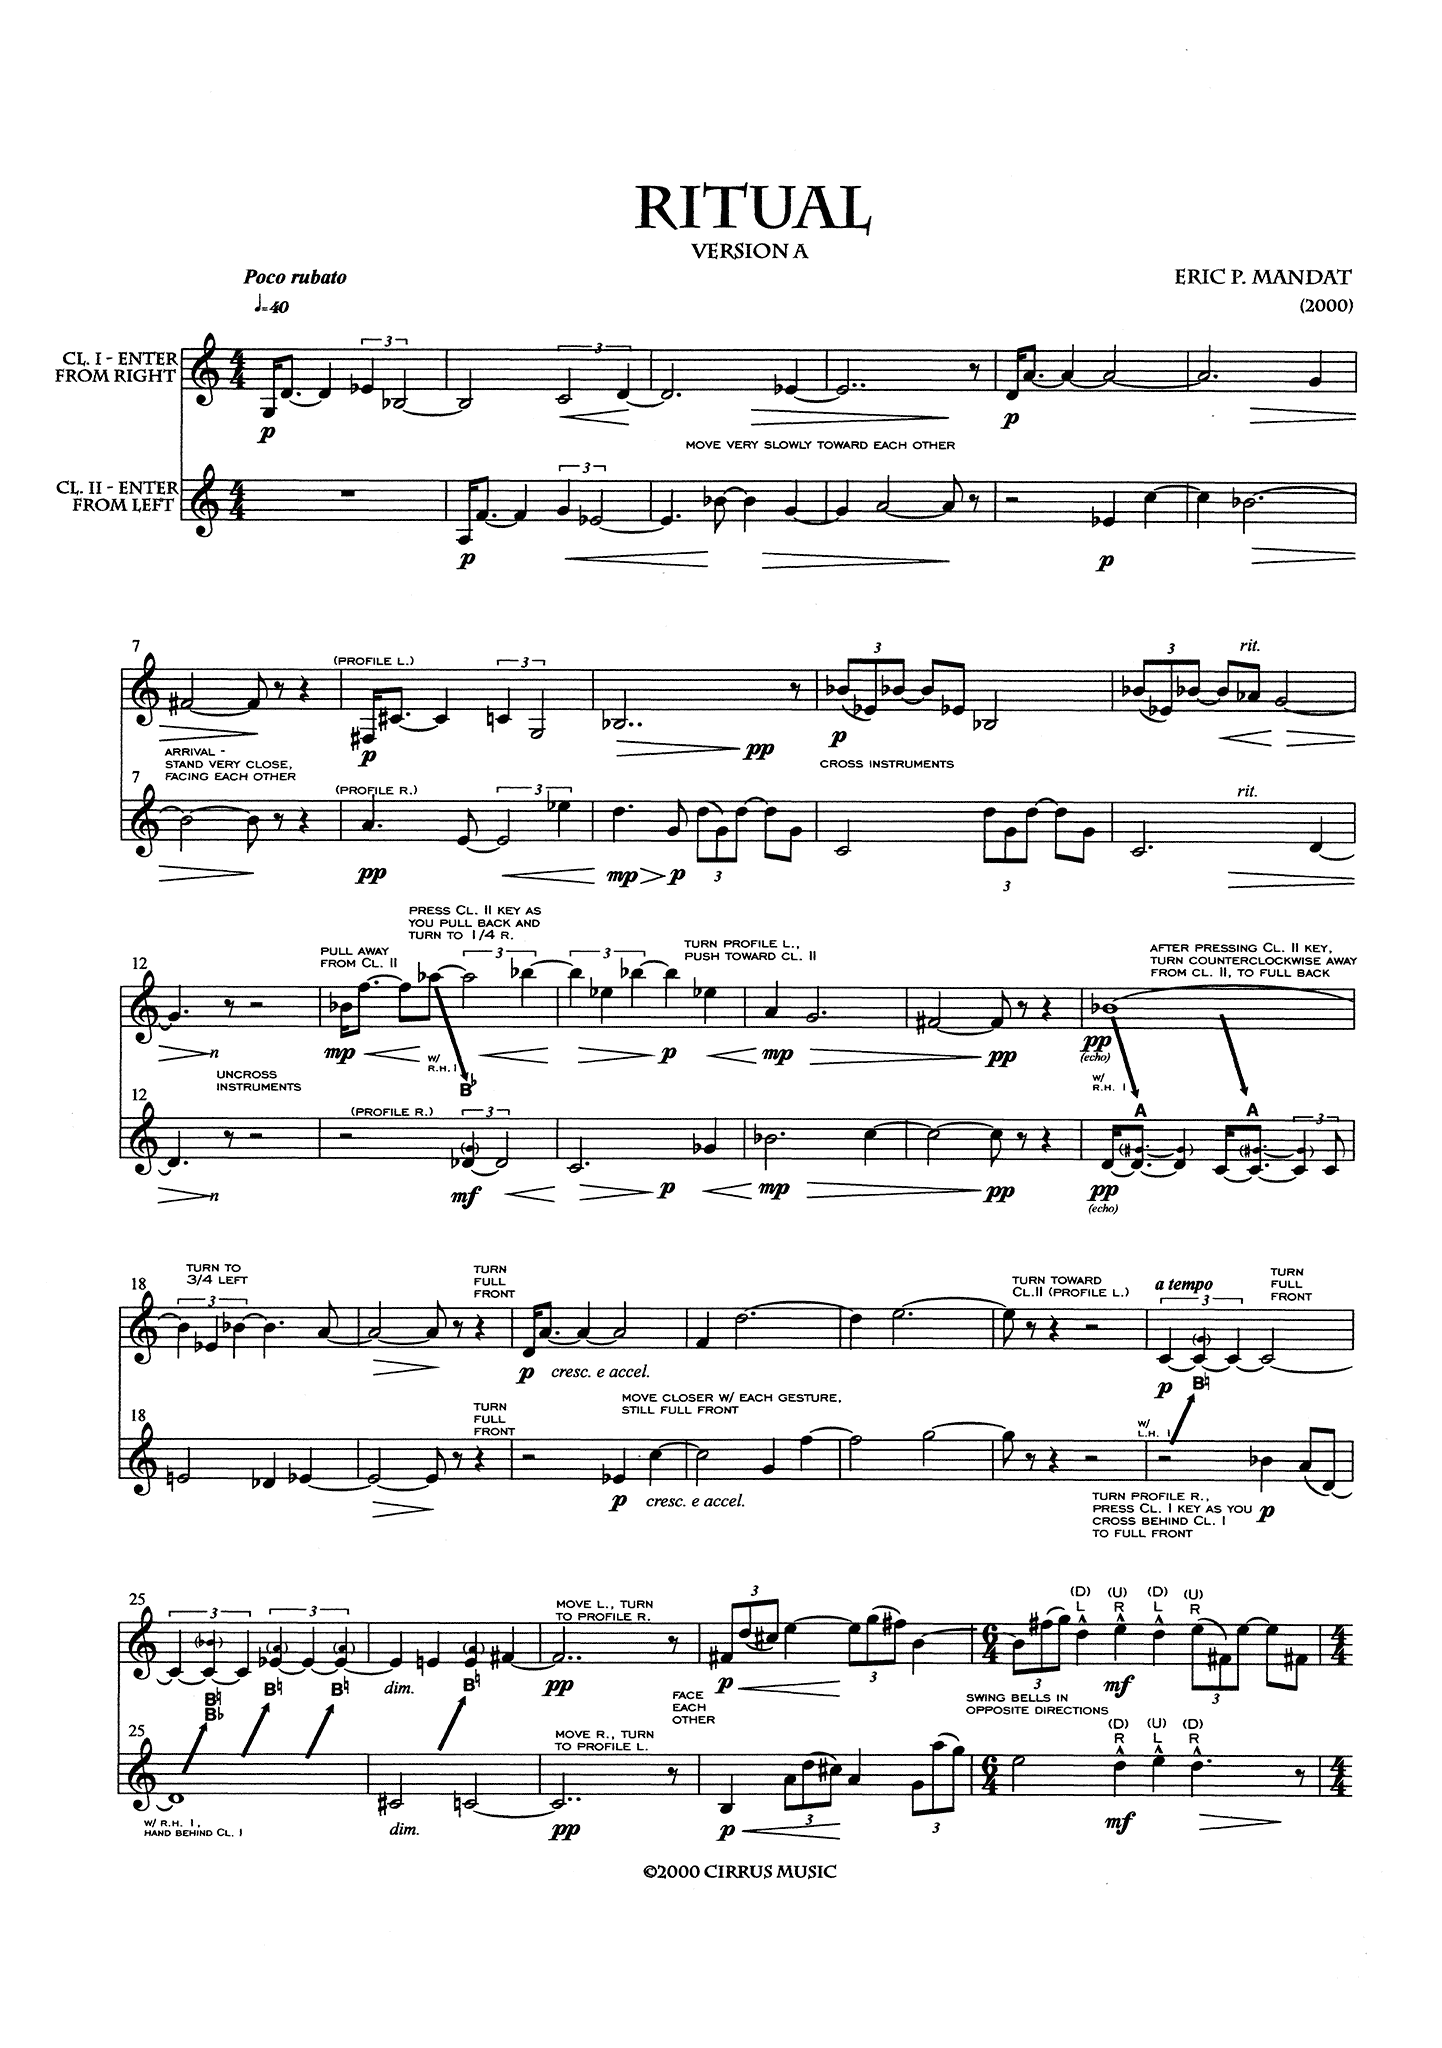 Mandat Ritual (Version A) clarinet duet page 1